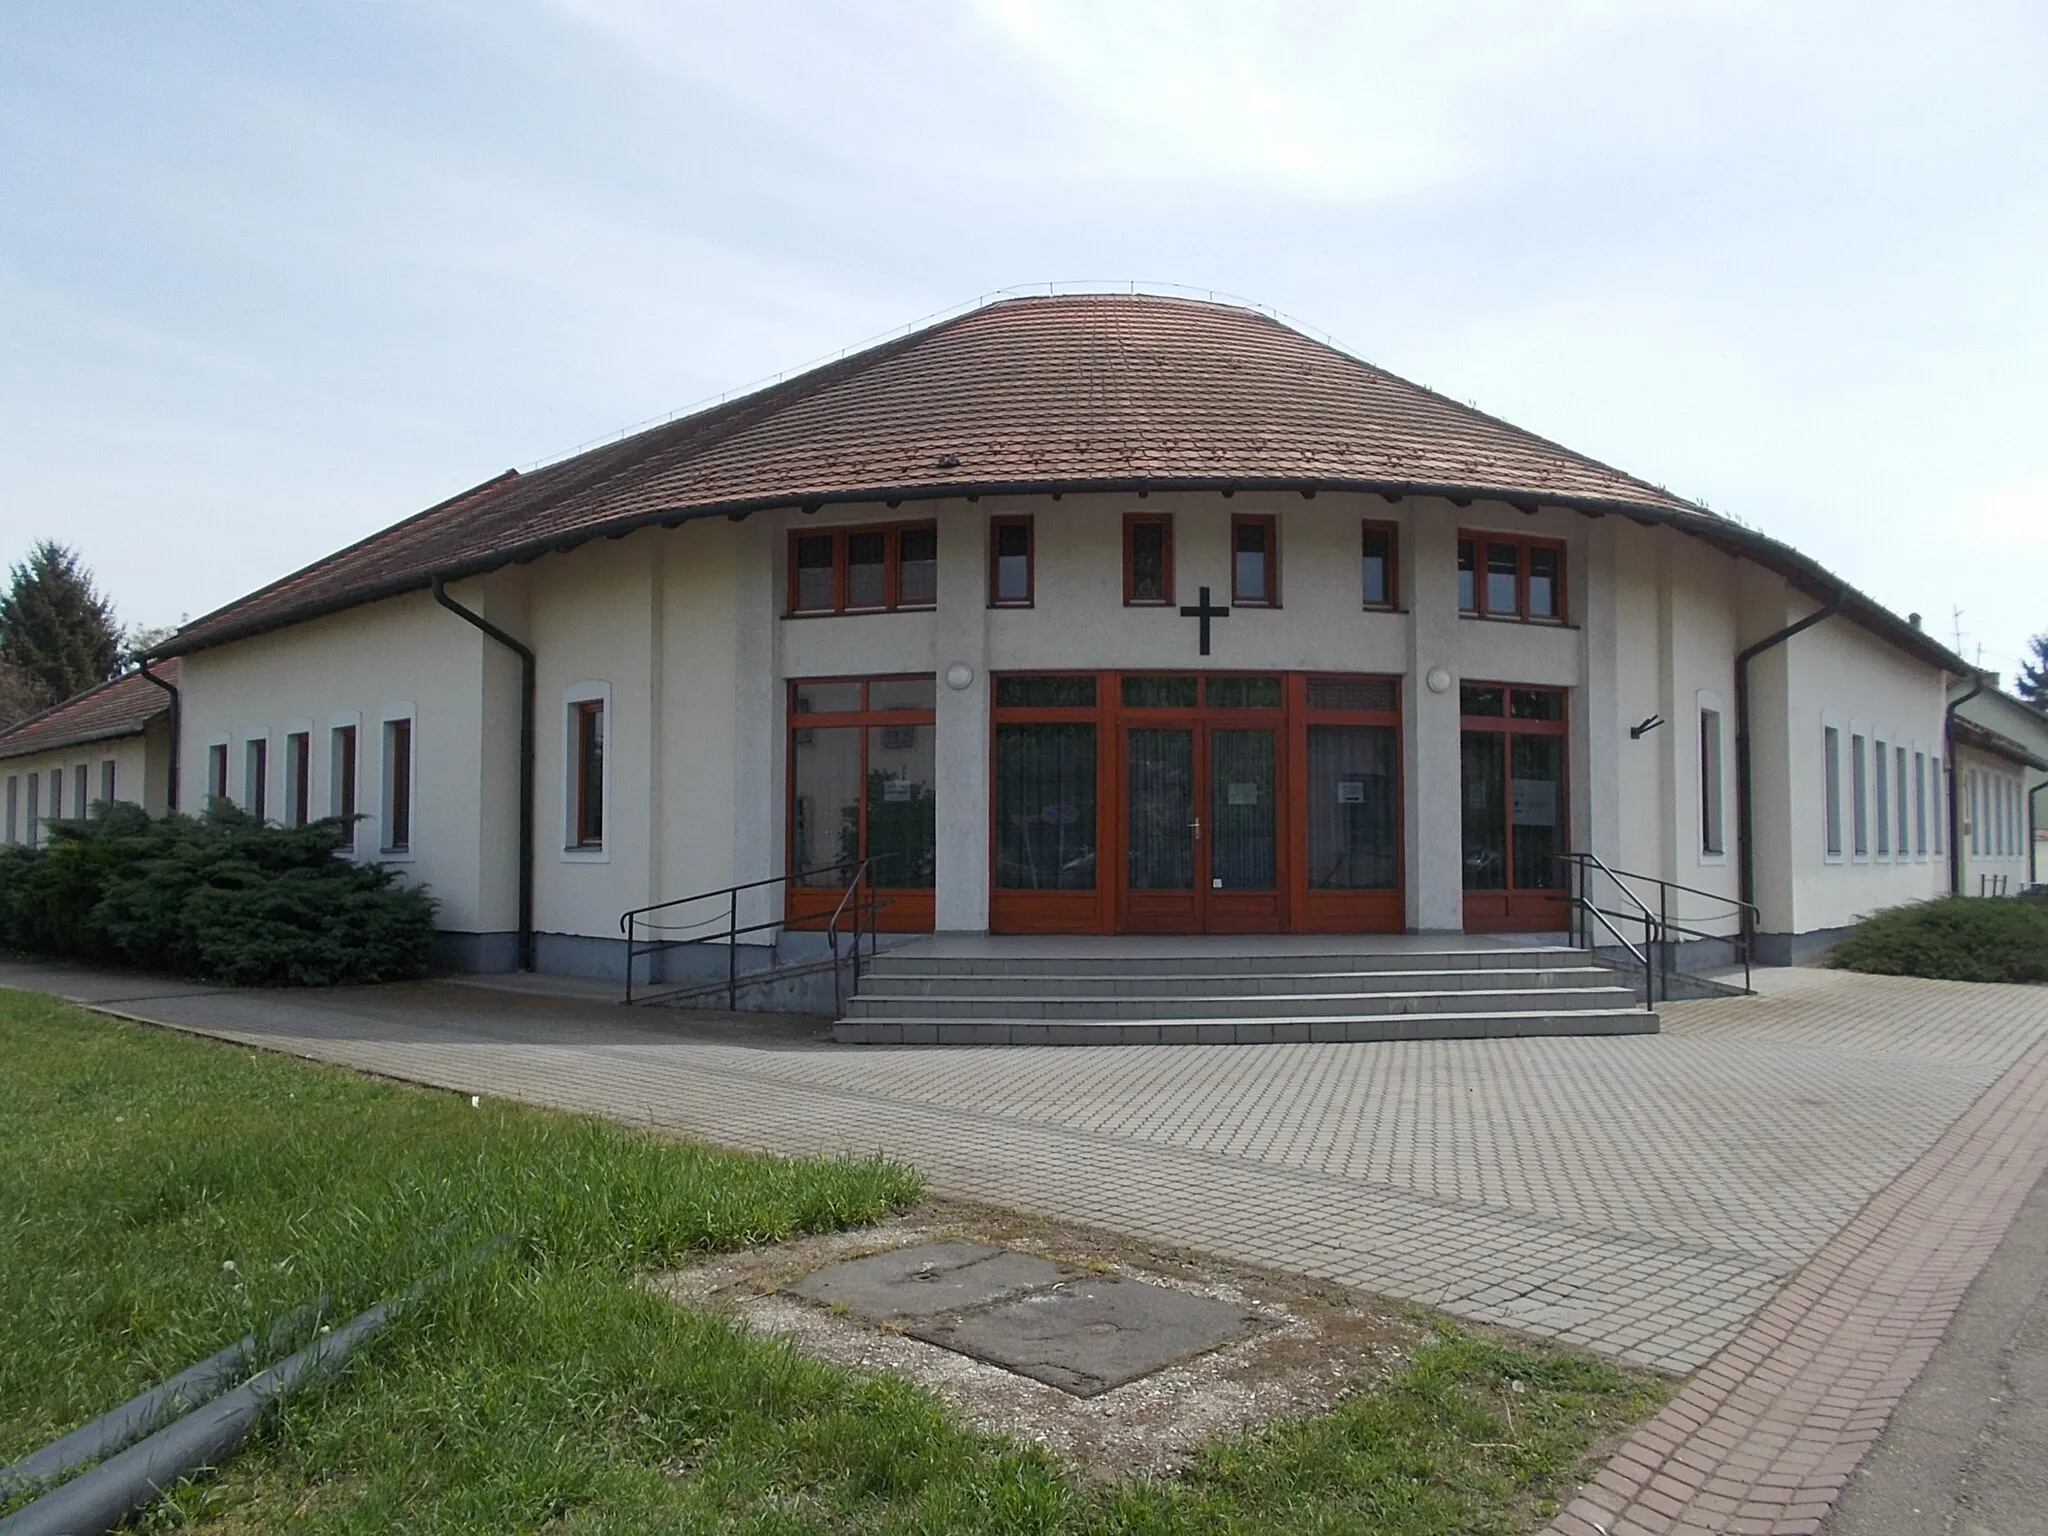 Photo showing: : John the Baptist Roman Catholic Parish and Meeting Hall. - 8. Hősök tere, Heves, Heves County, Hungary.